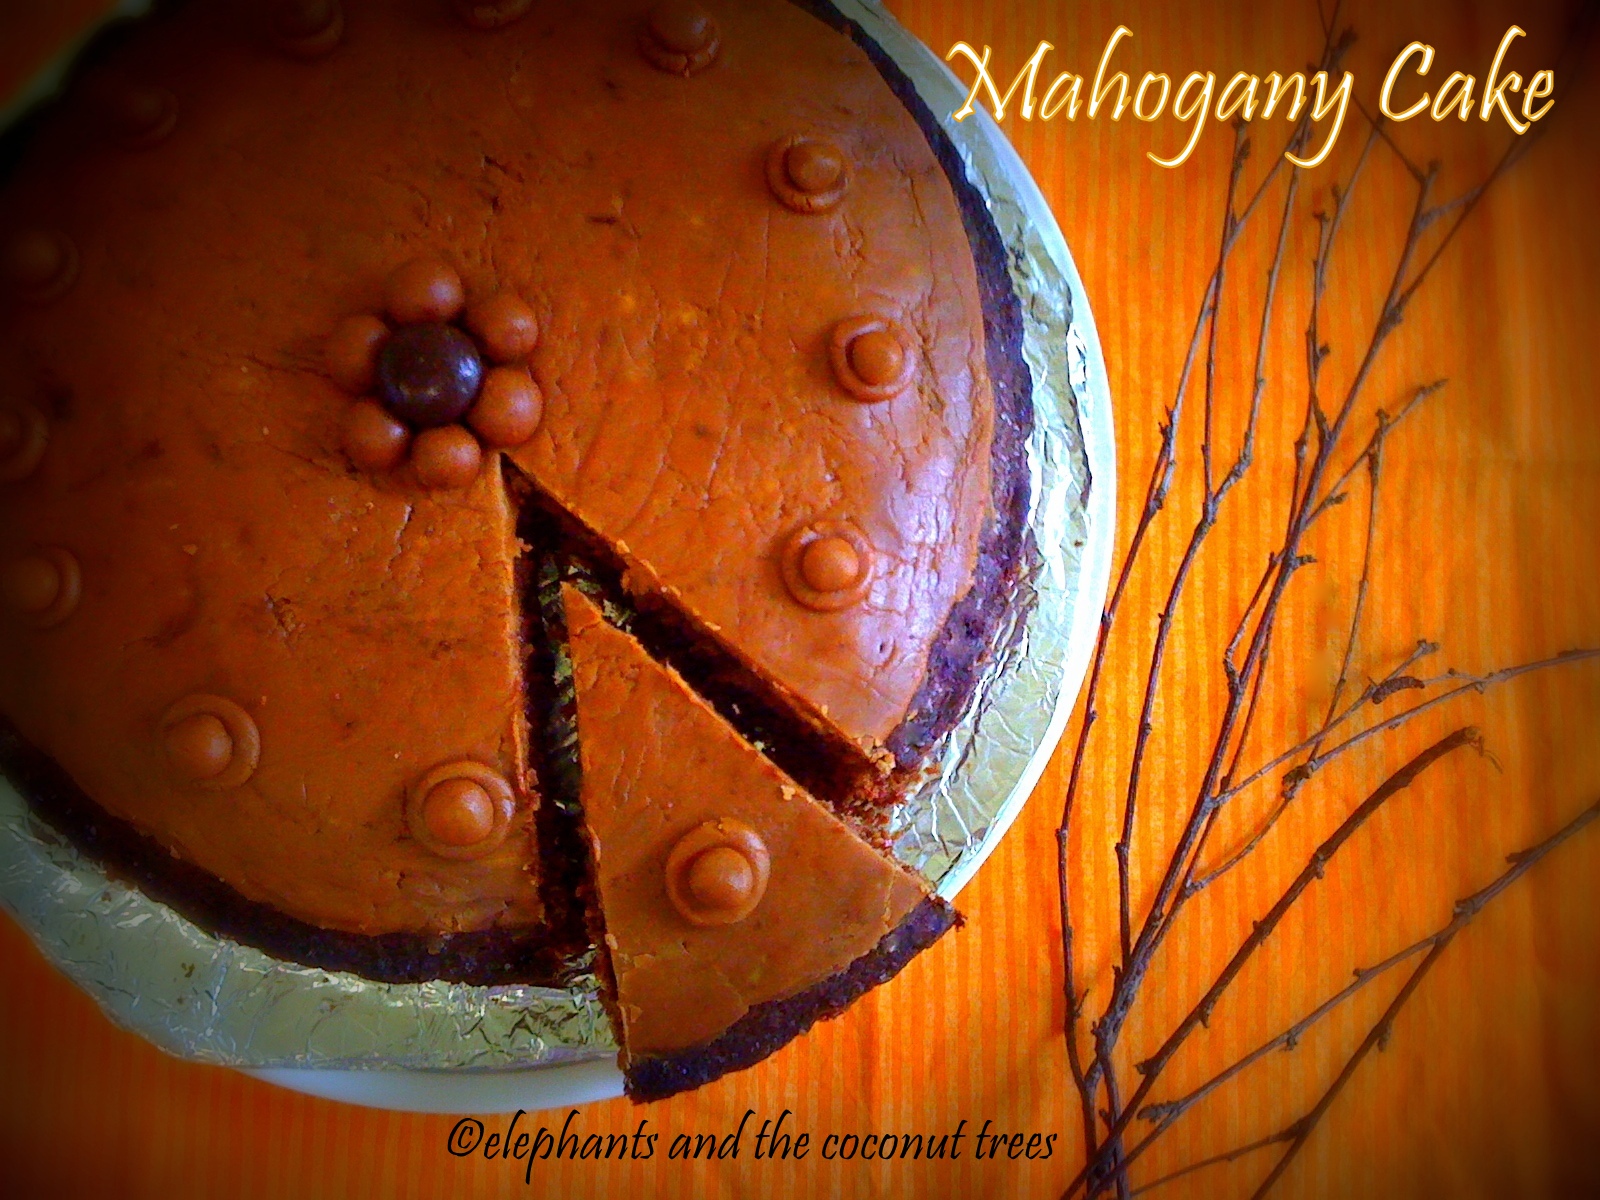 Mahogany cake / Chocolate and coffee cake with fudge frosting